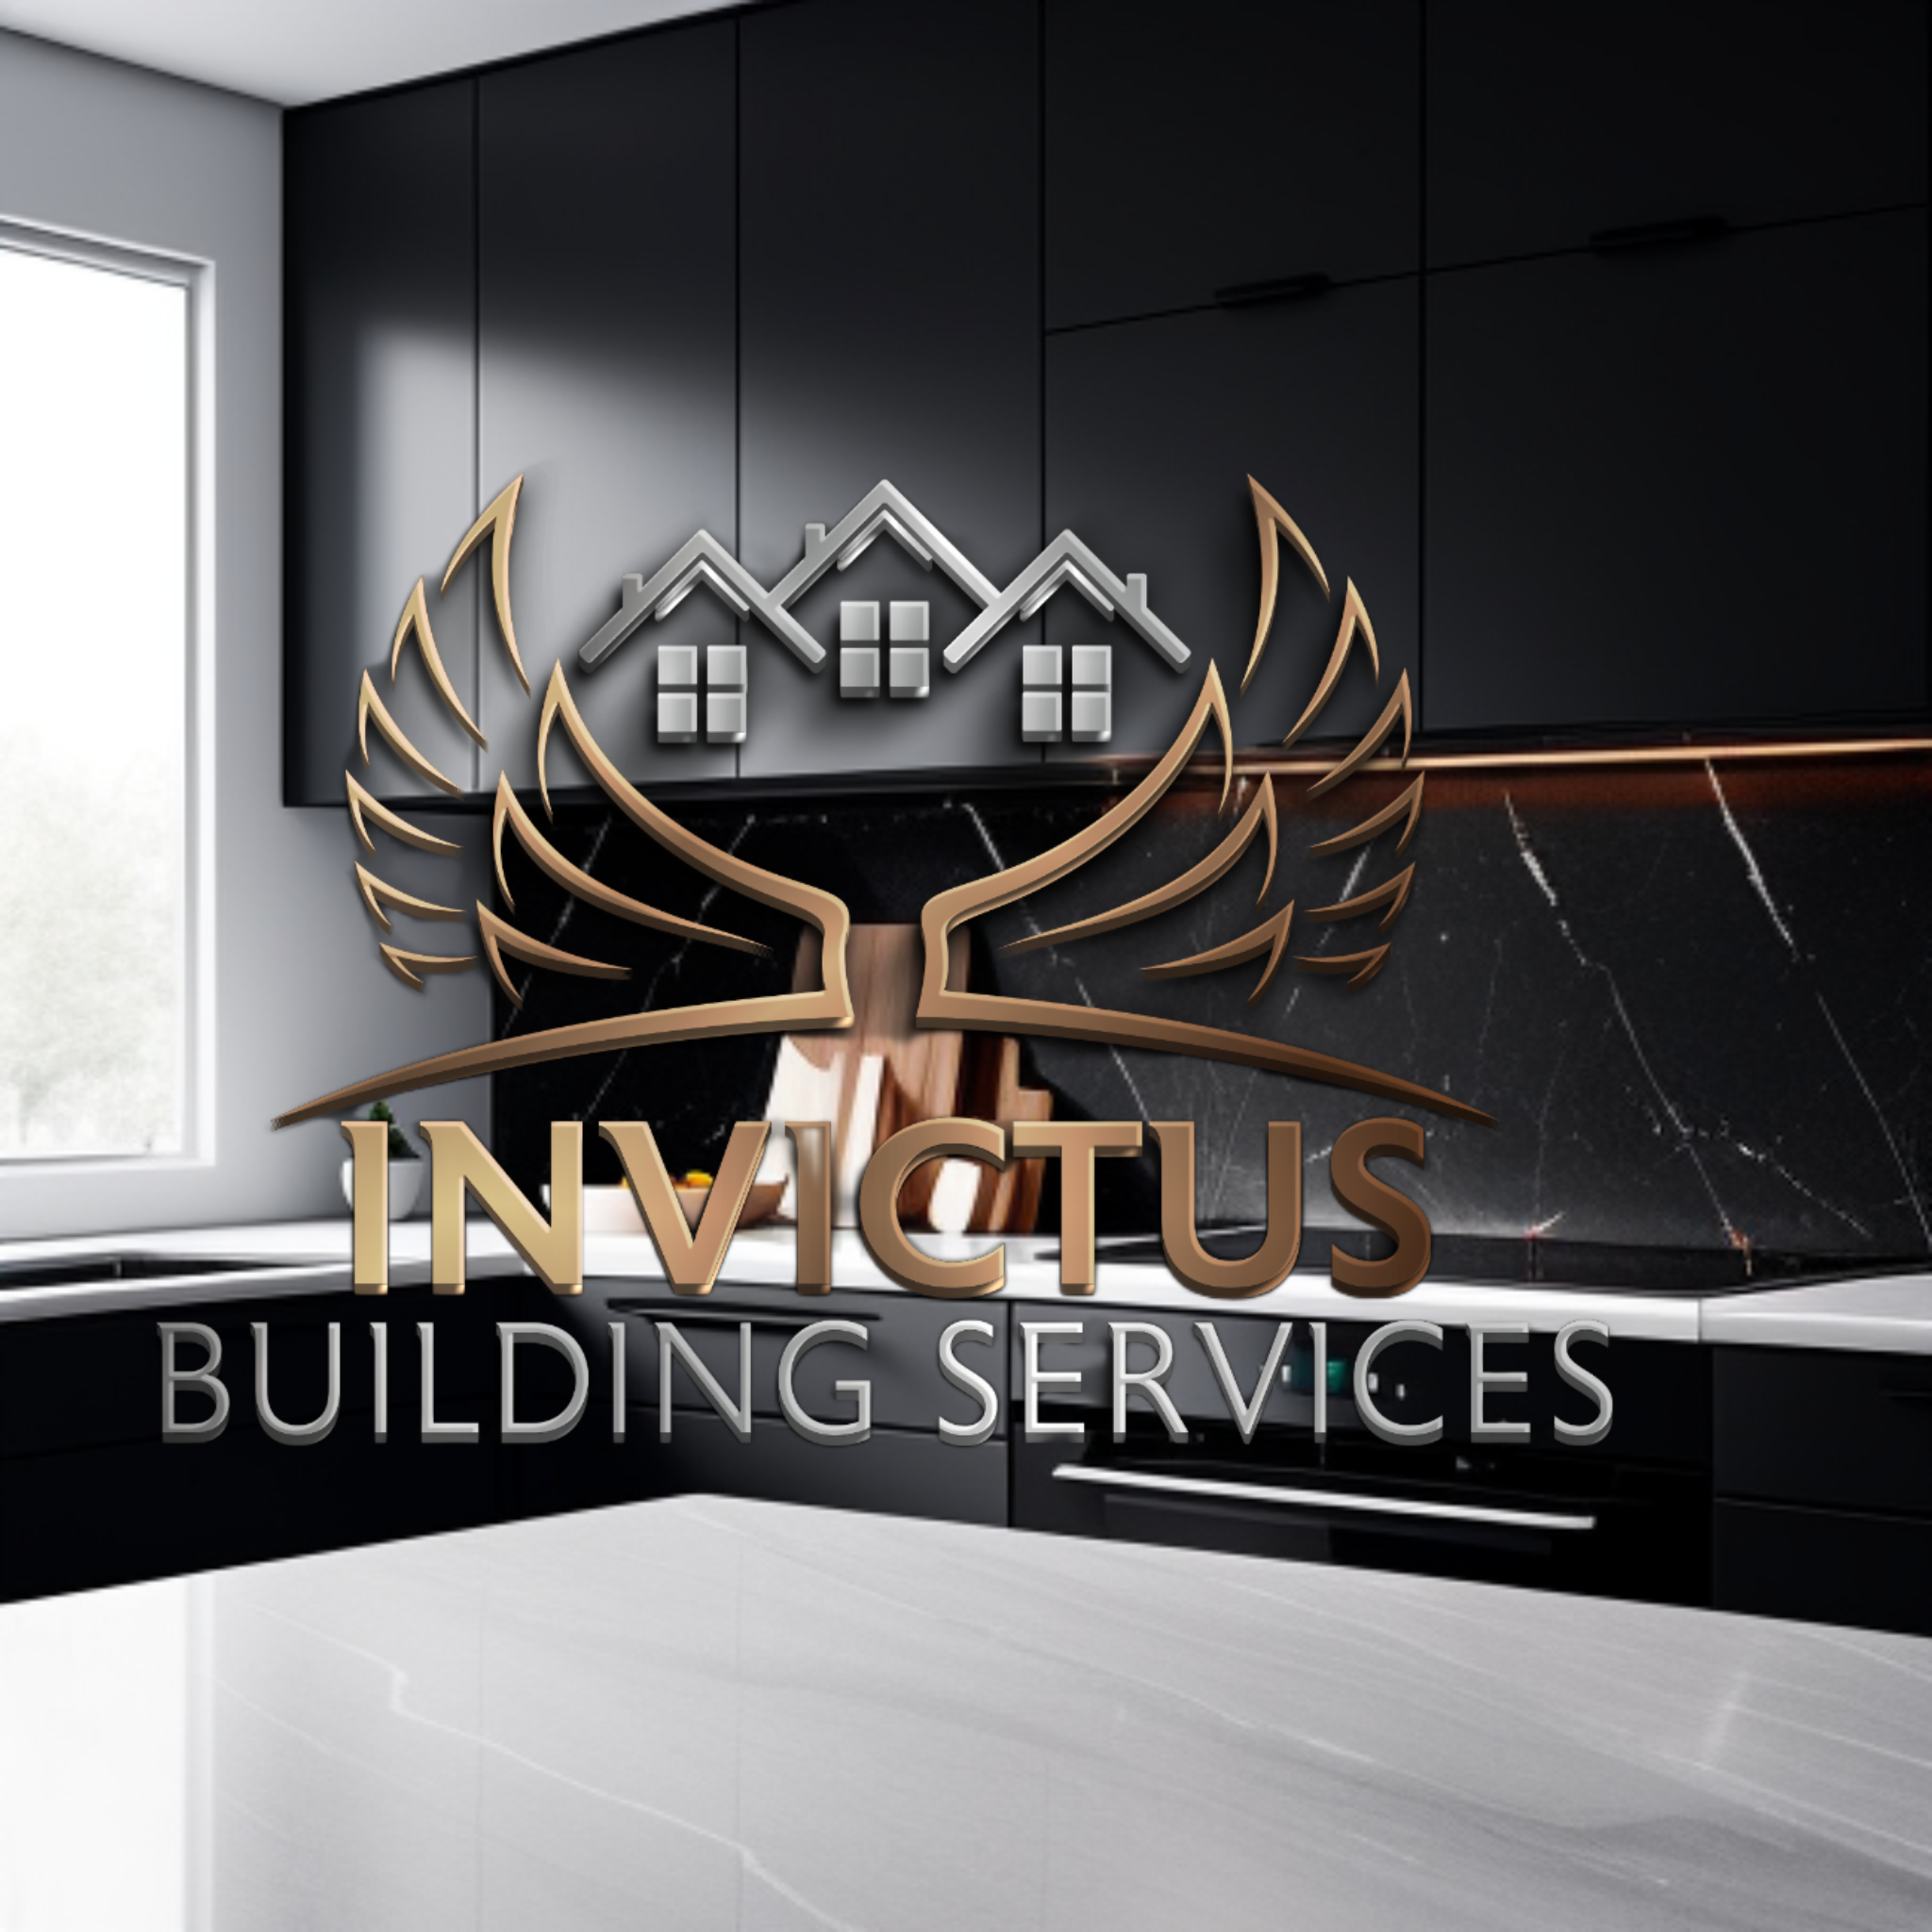 Company Invictus Building Services. Description and contact information.